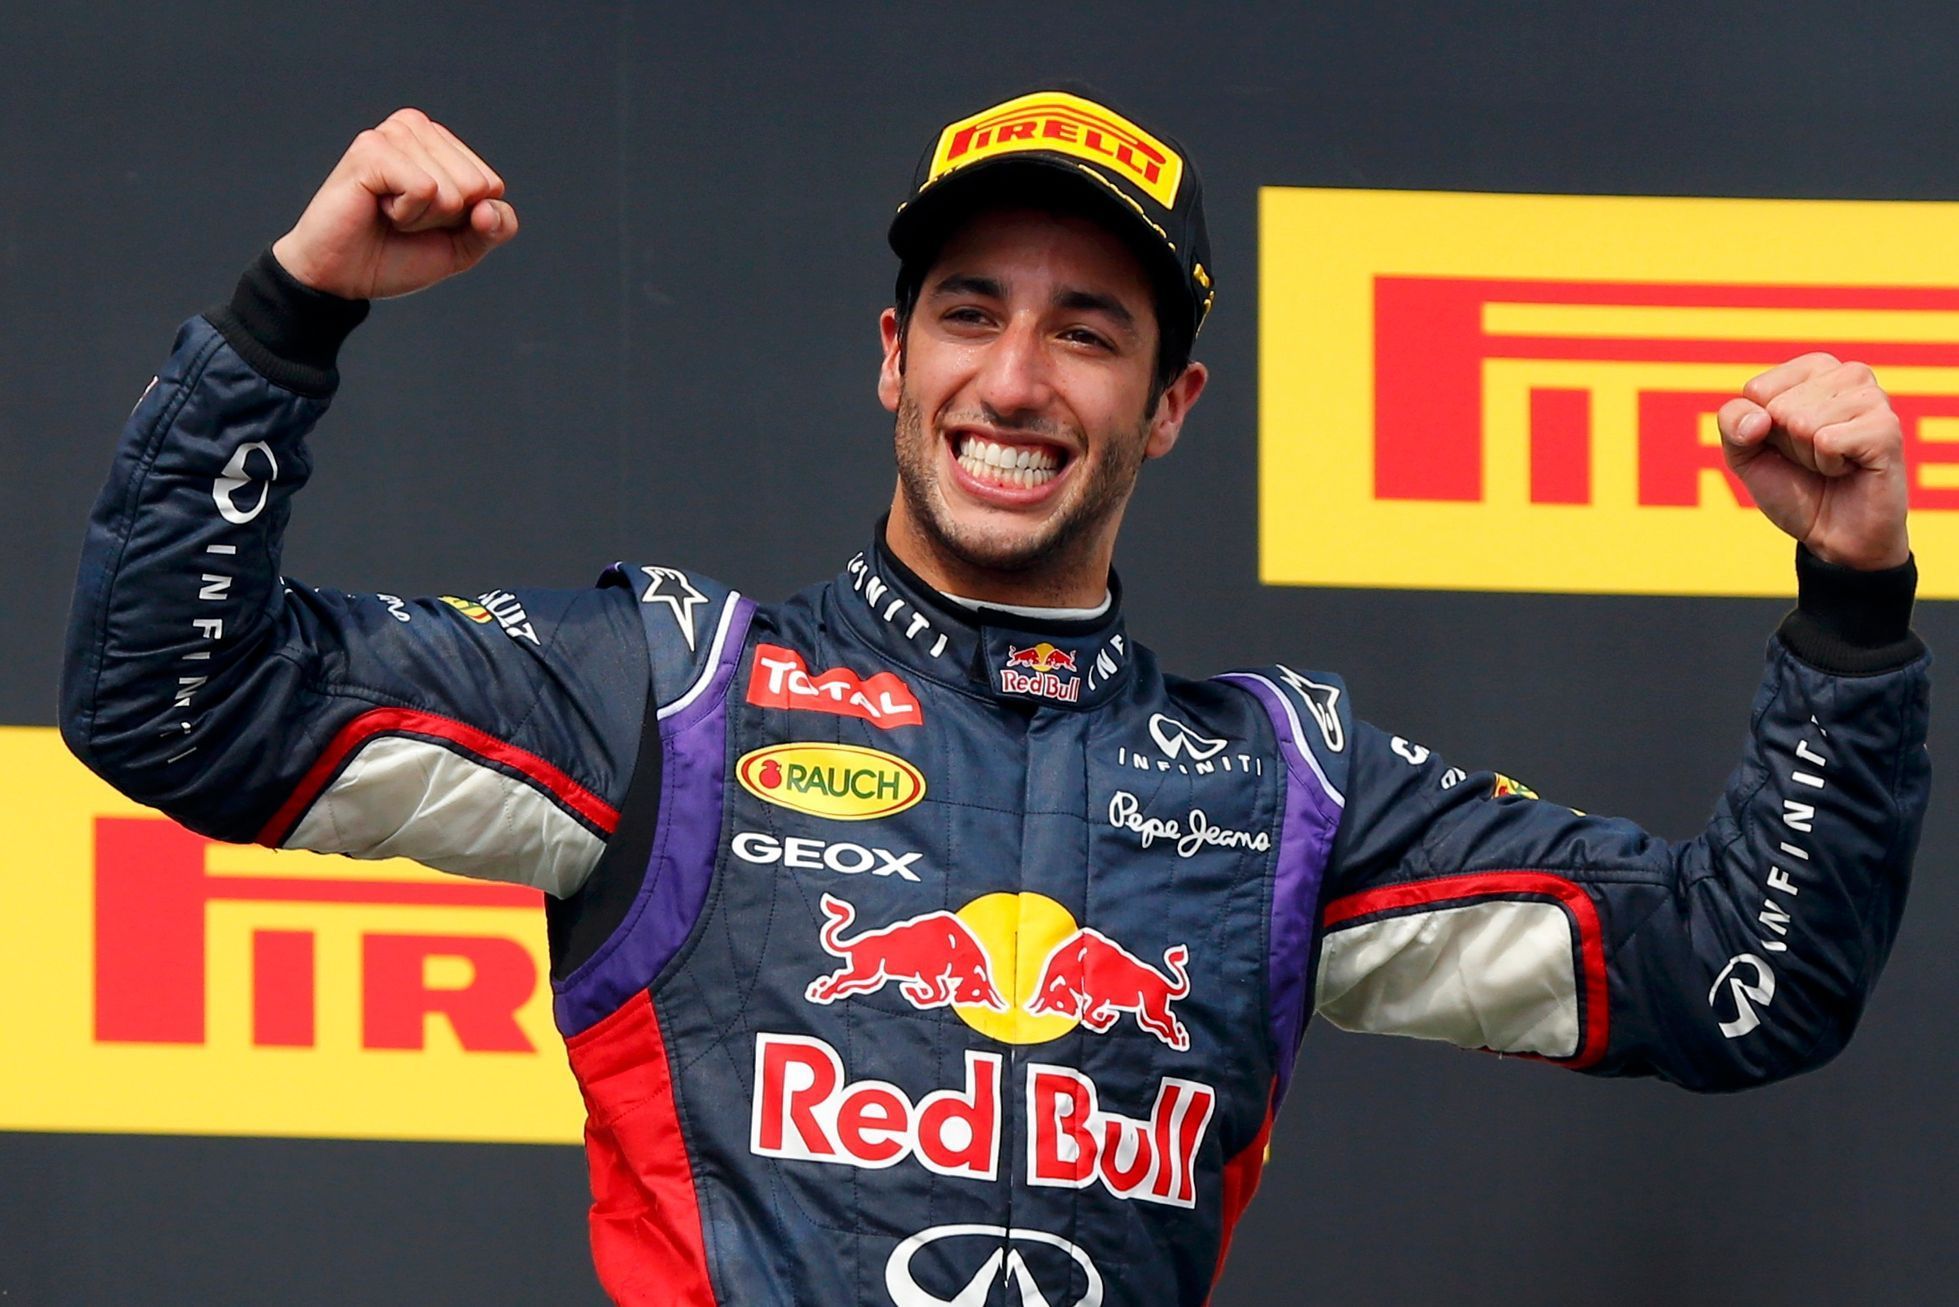 Red Bull Formula One driver Ricciardo of Australia celebrates after winning the Hungarian F1 Grand Prix at the Hungaroring circuit, near Budapest